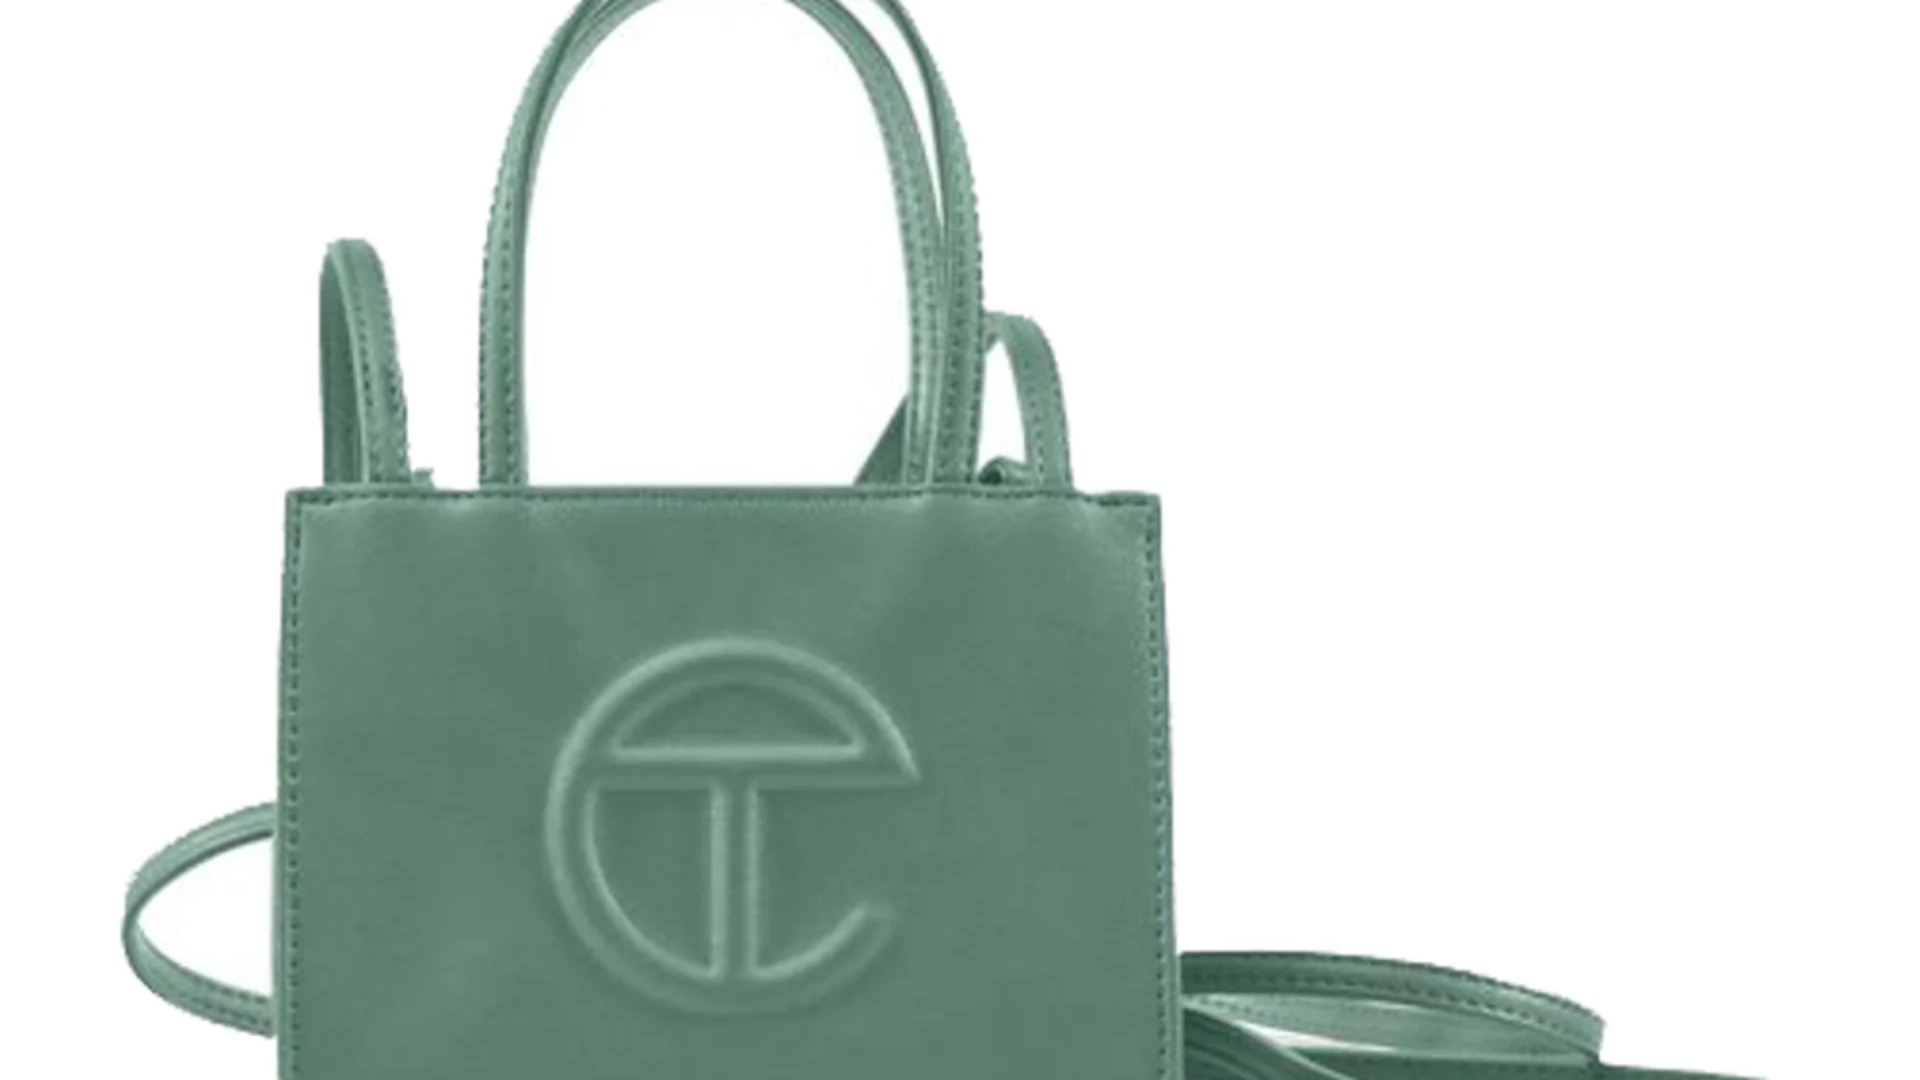 Telfar Bags See Resale Value Retention Higher Than Hermès, Rebag Says – WWD